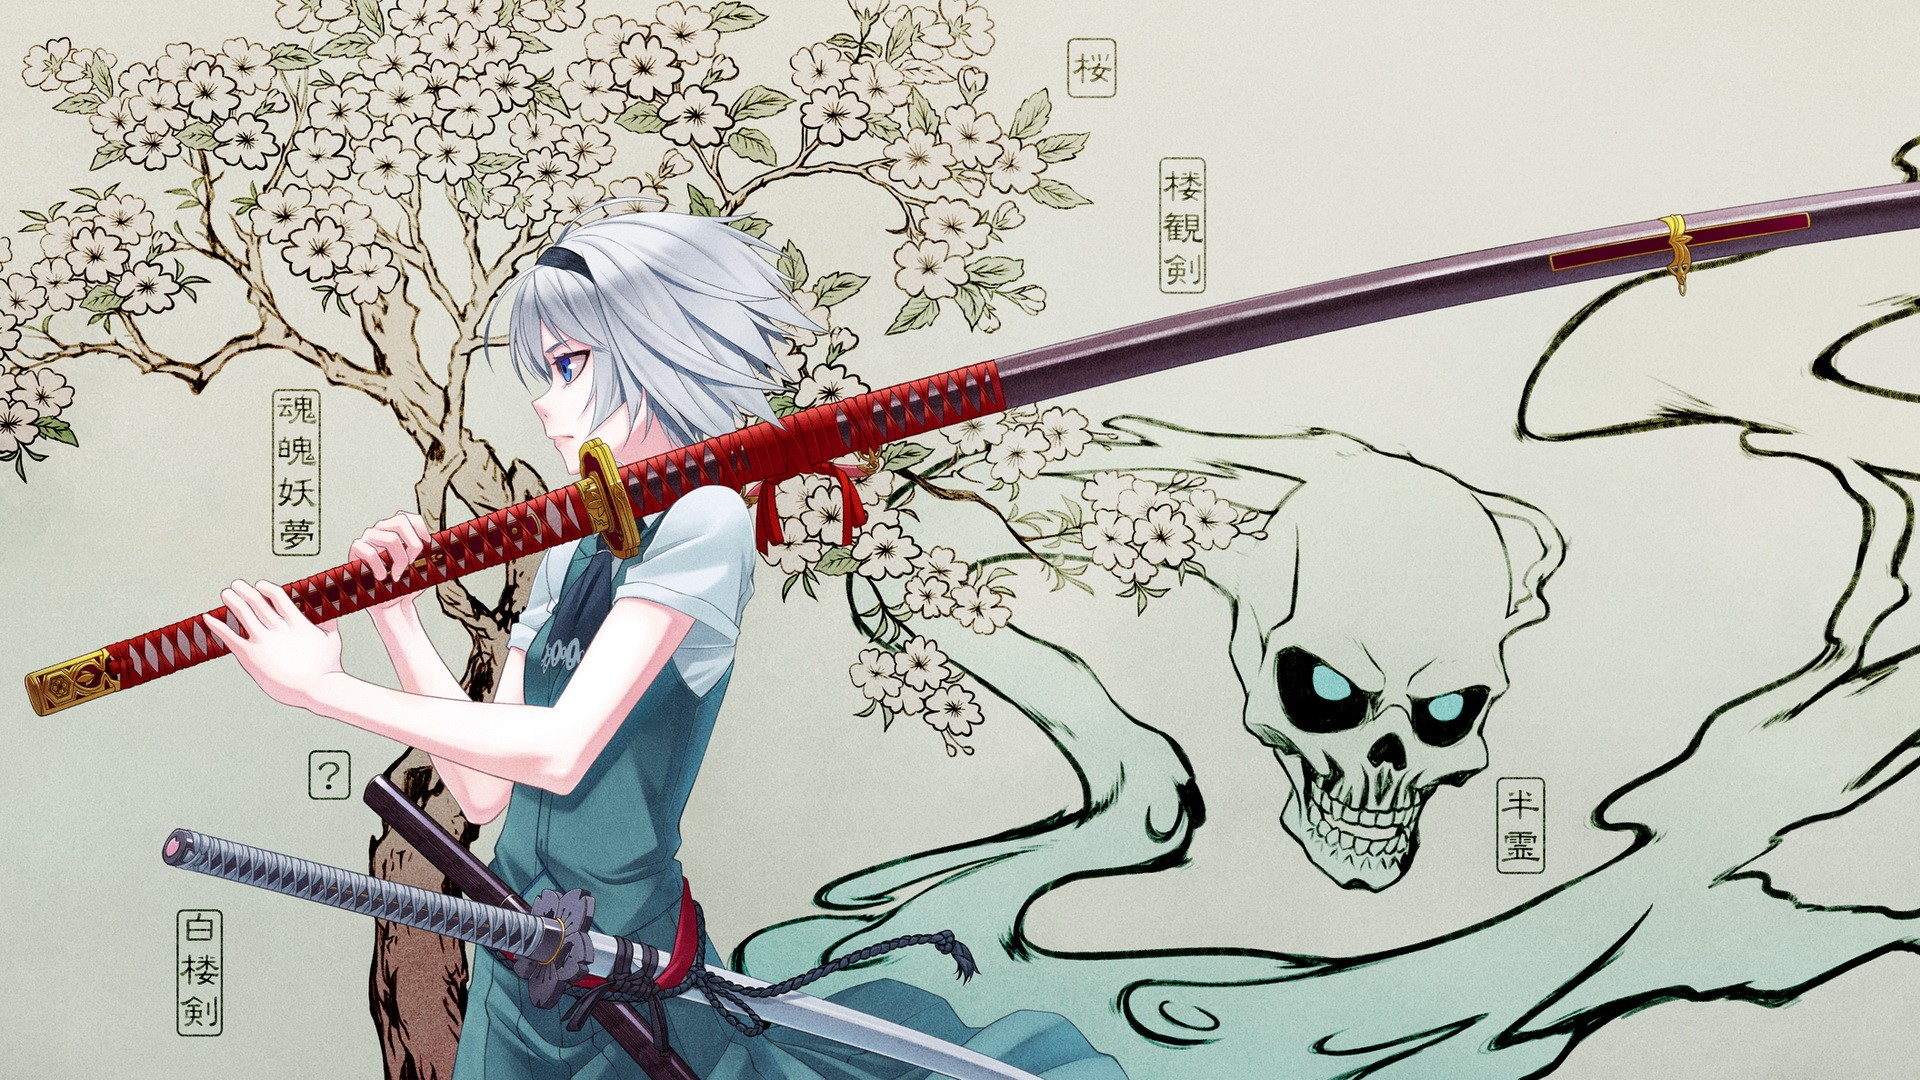 Free Download Anime Samurai Girl Wallpaper Hd Wallpapers Desktop